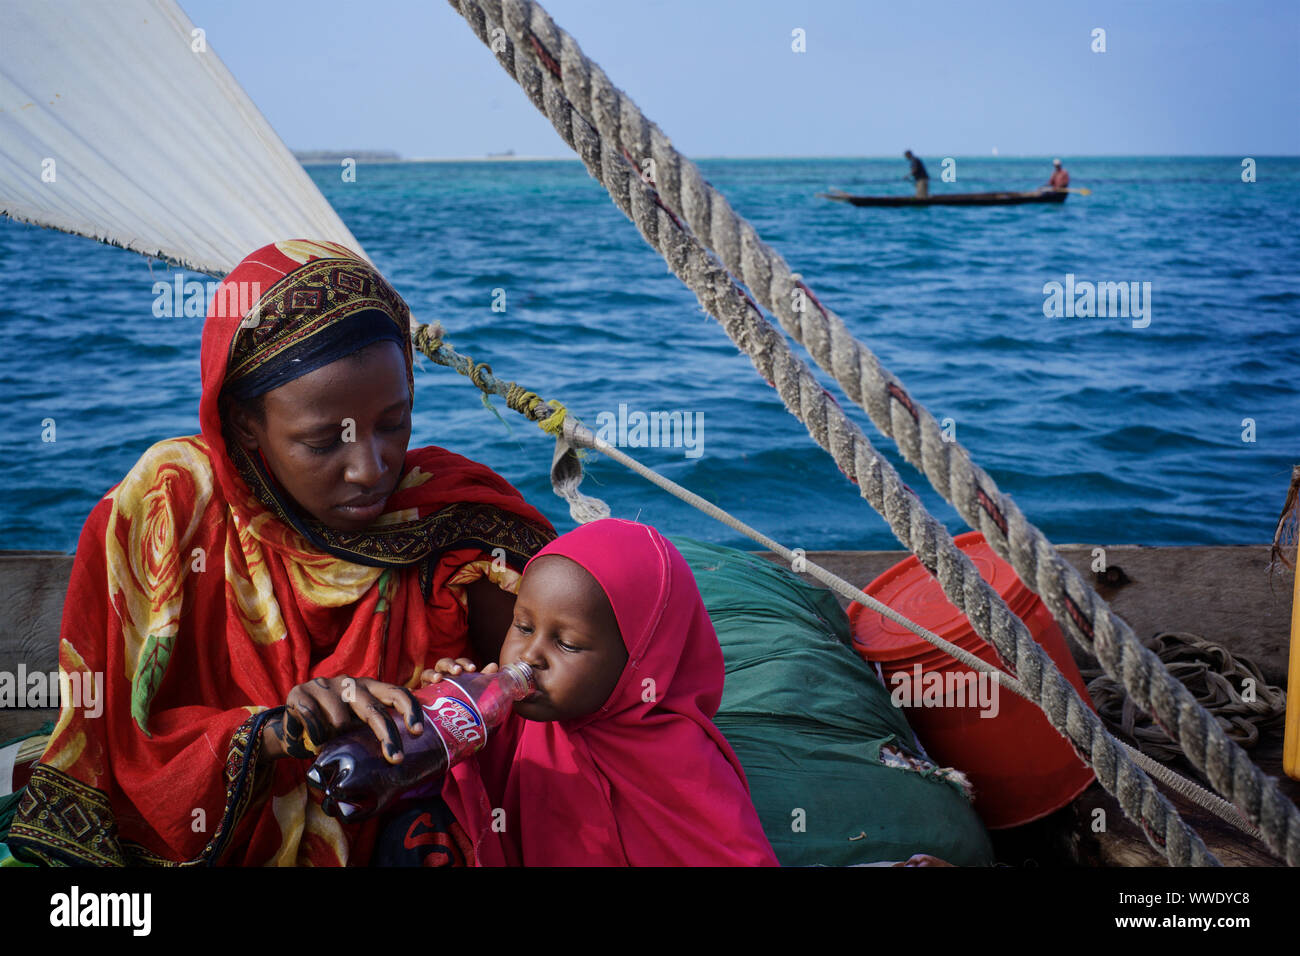 Swahili woman with veiled baby on dhow, Pemba island, Zanzibar Archipelago, Tanzania Stock Photo